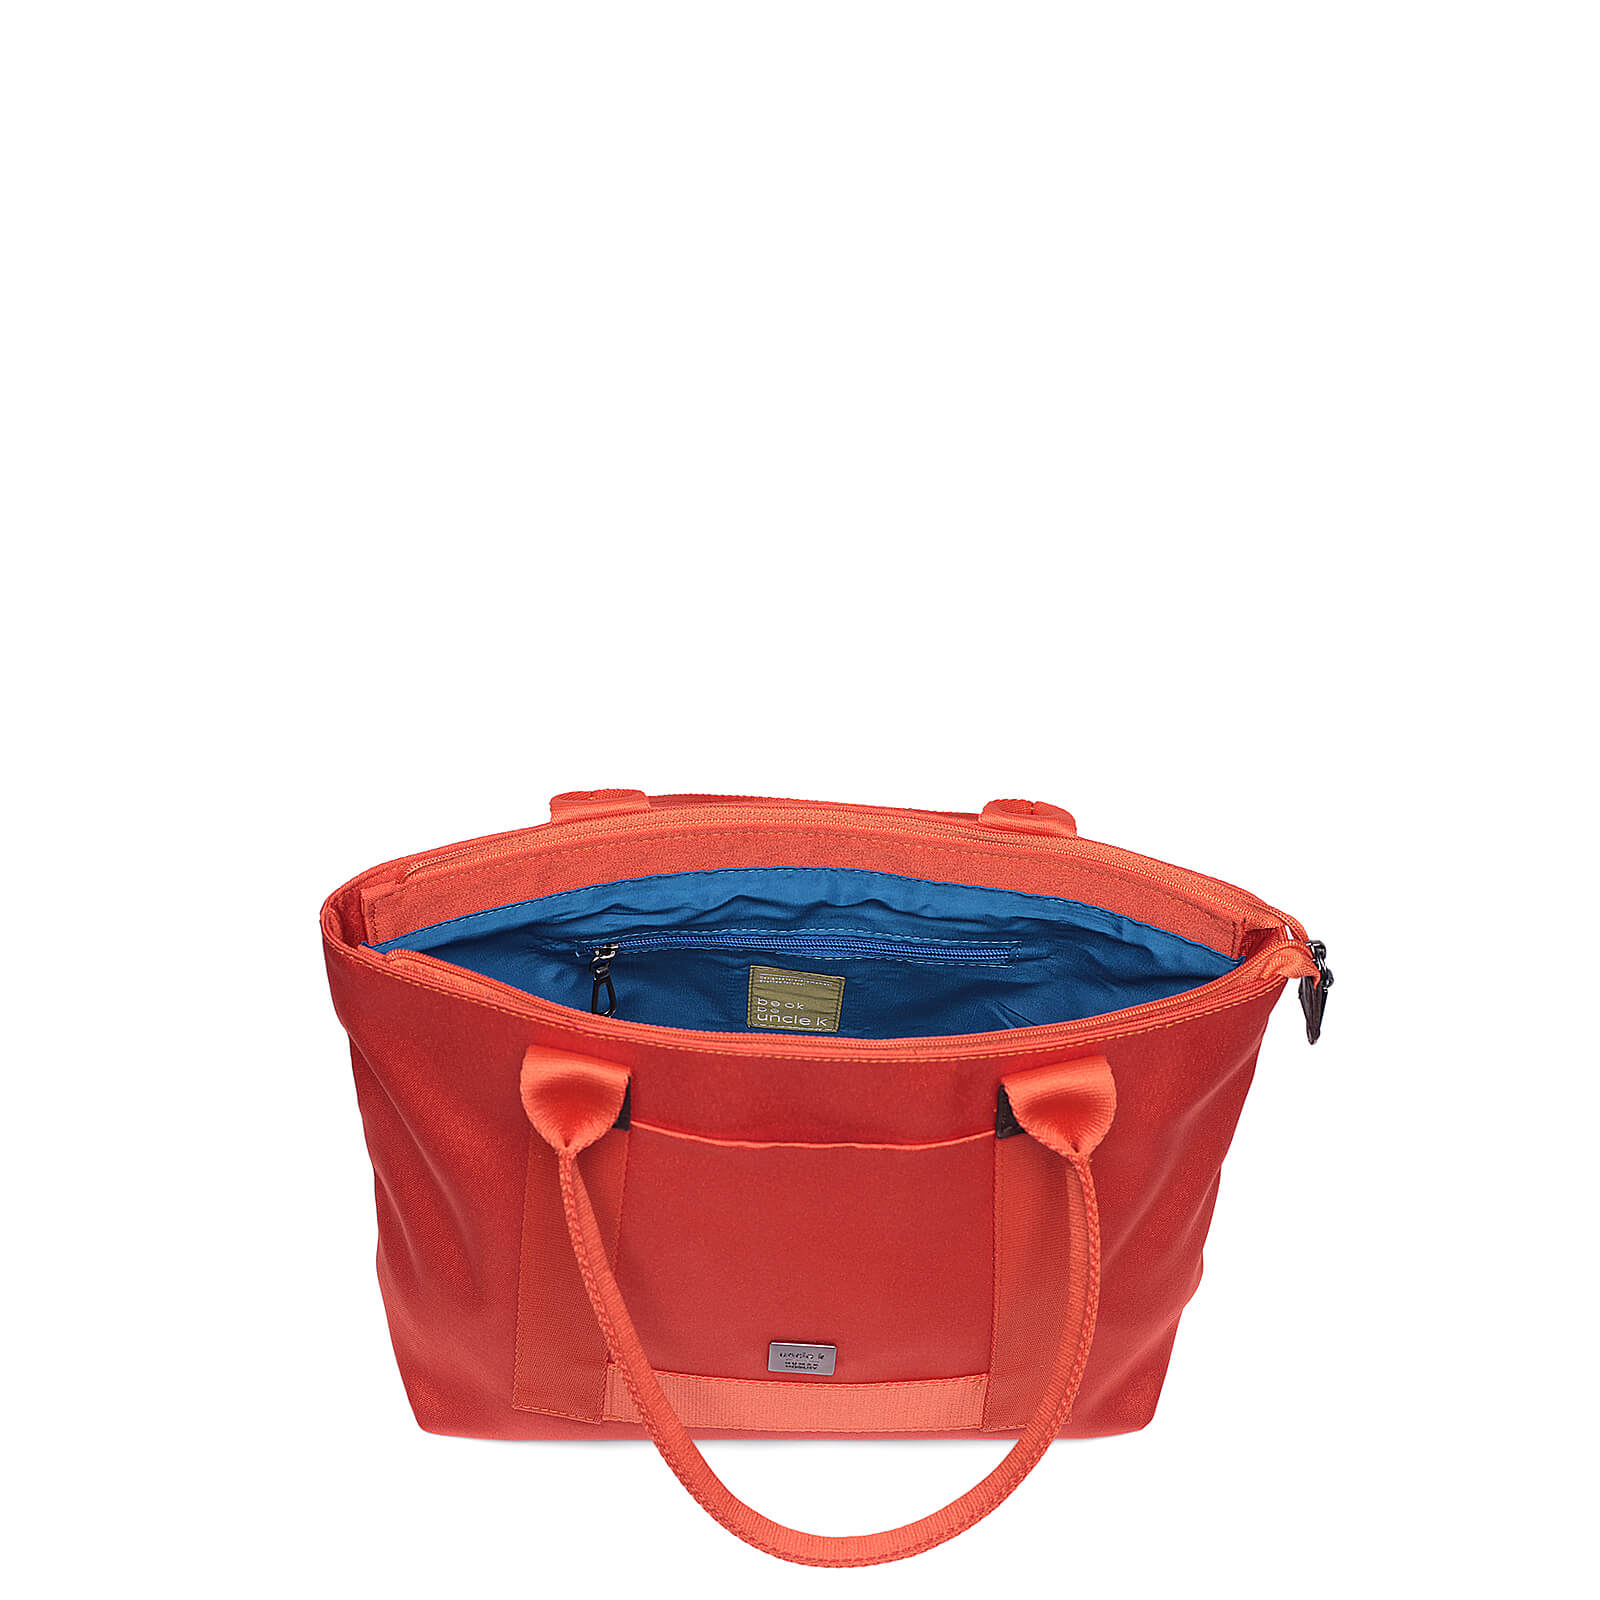 bolsa-shopping-bag-nylon-61092-v24-unclek-laranja-3